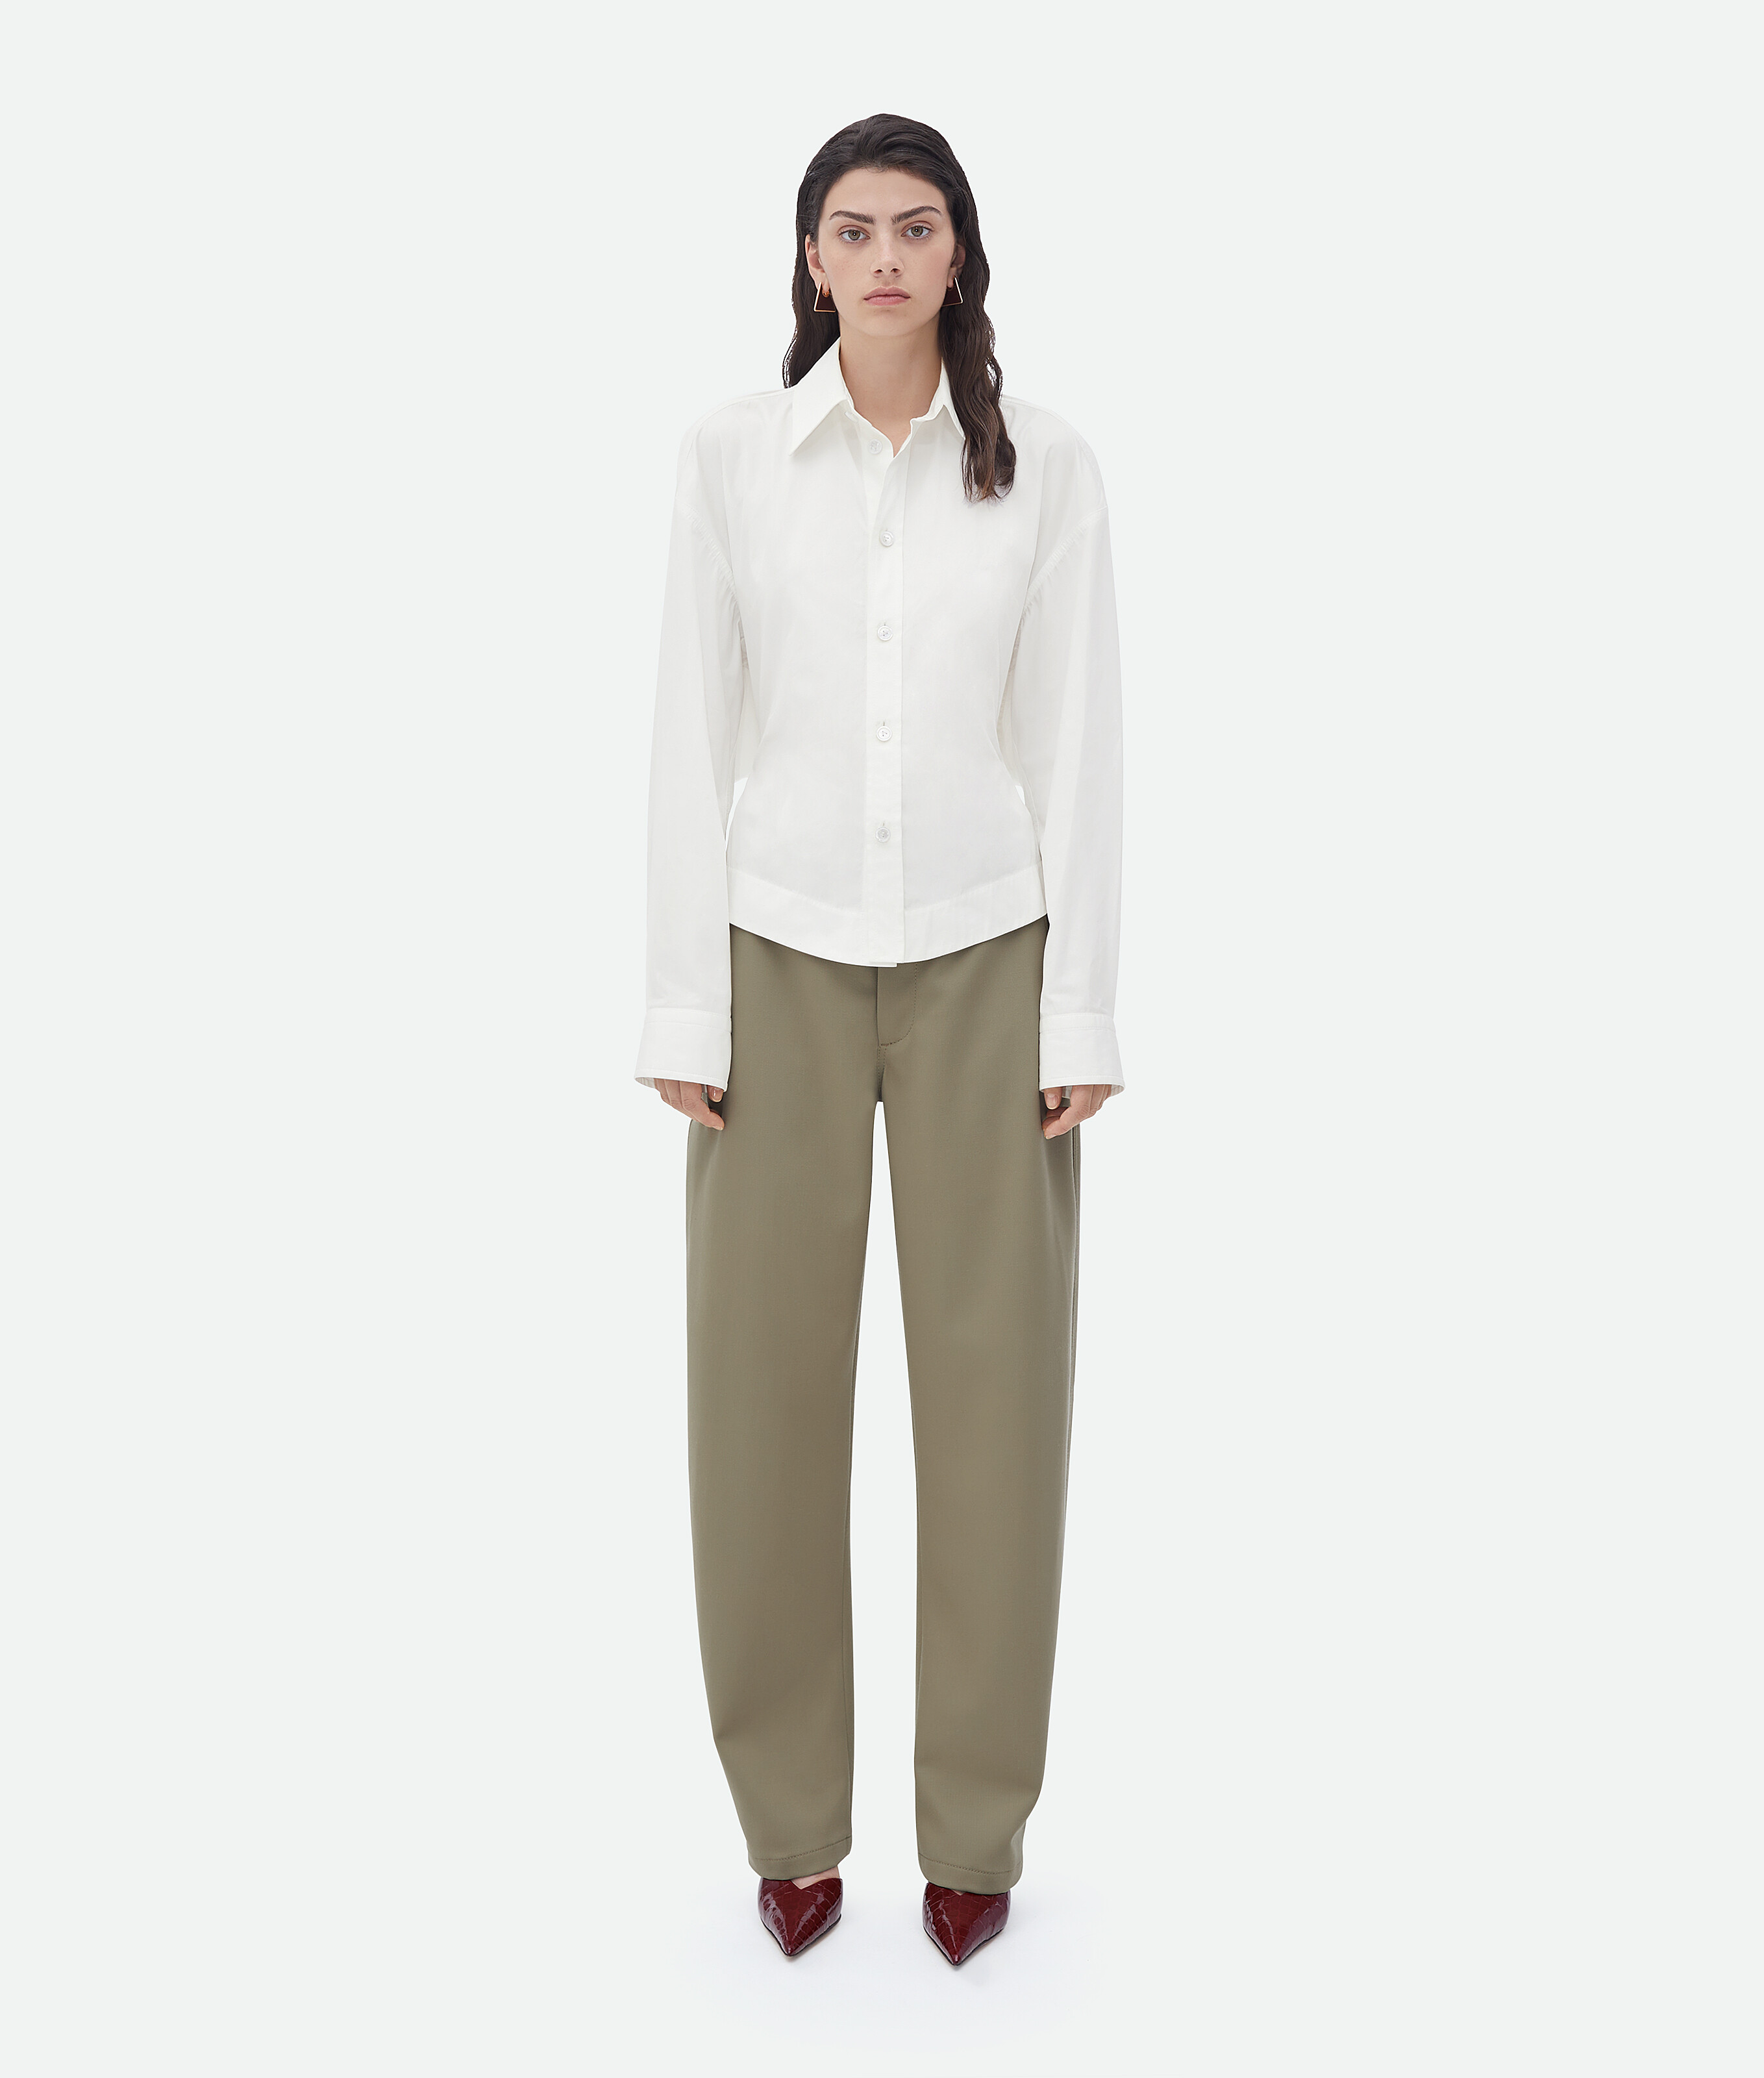 Bottega Veneta® Women's Compact Cotton Shirt in Chalk. Shop online 